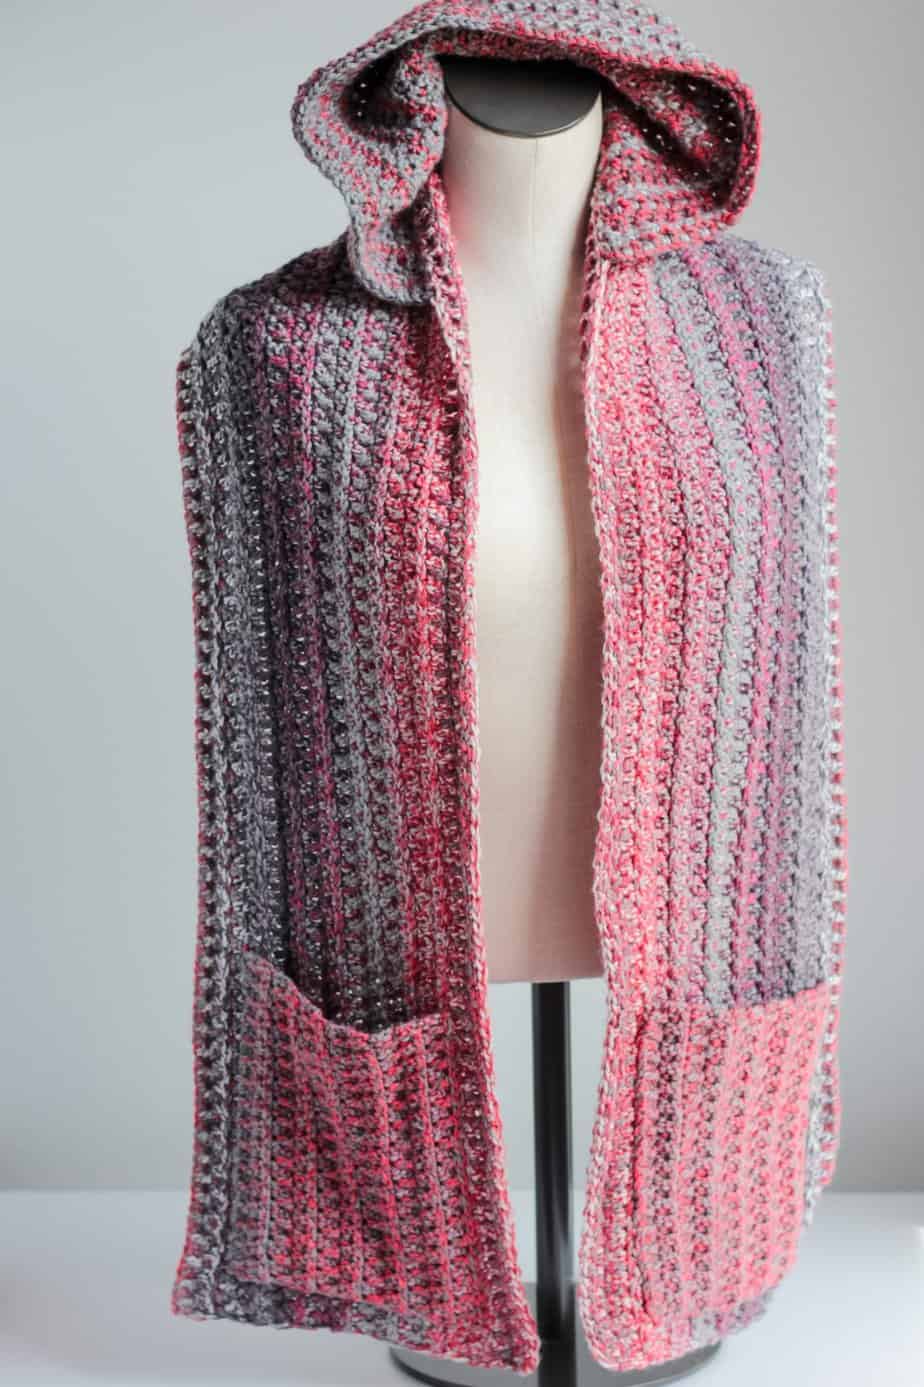 crochet hooded pocket scarf using Mandala Tweed Stripes